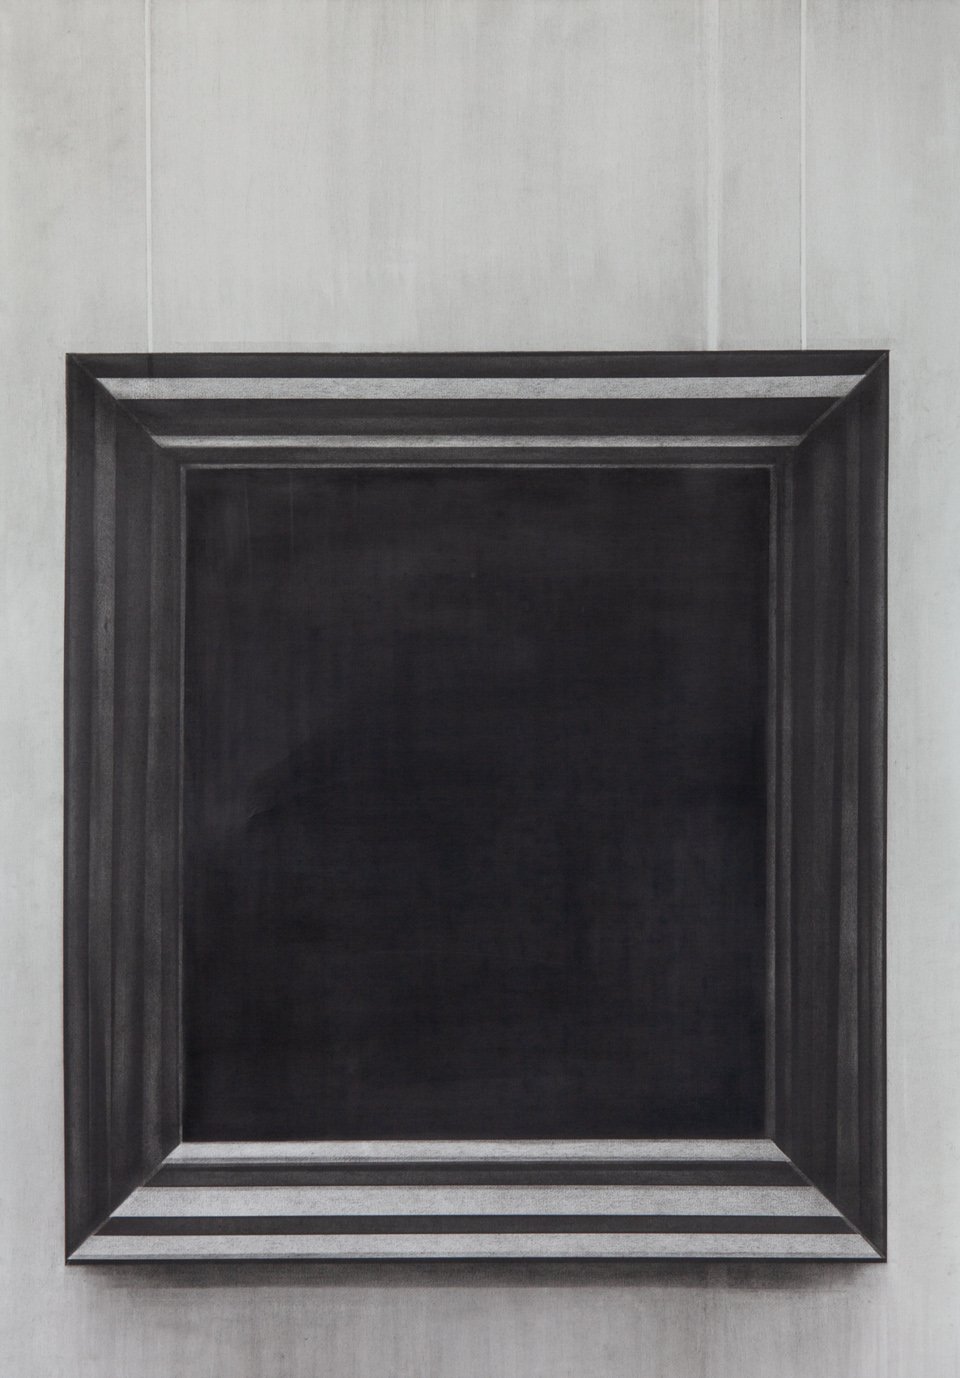  Black Square, 2019, charcoal on paper, 100 x 70 cm 